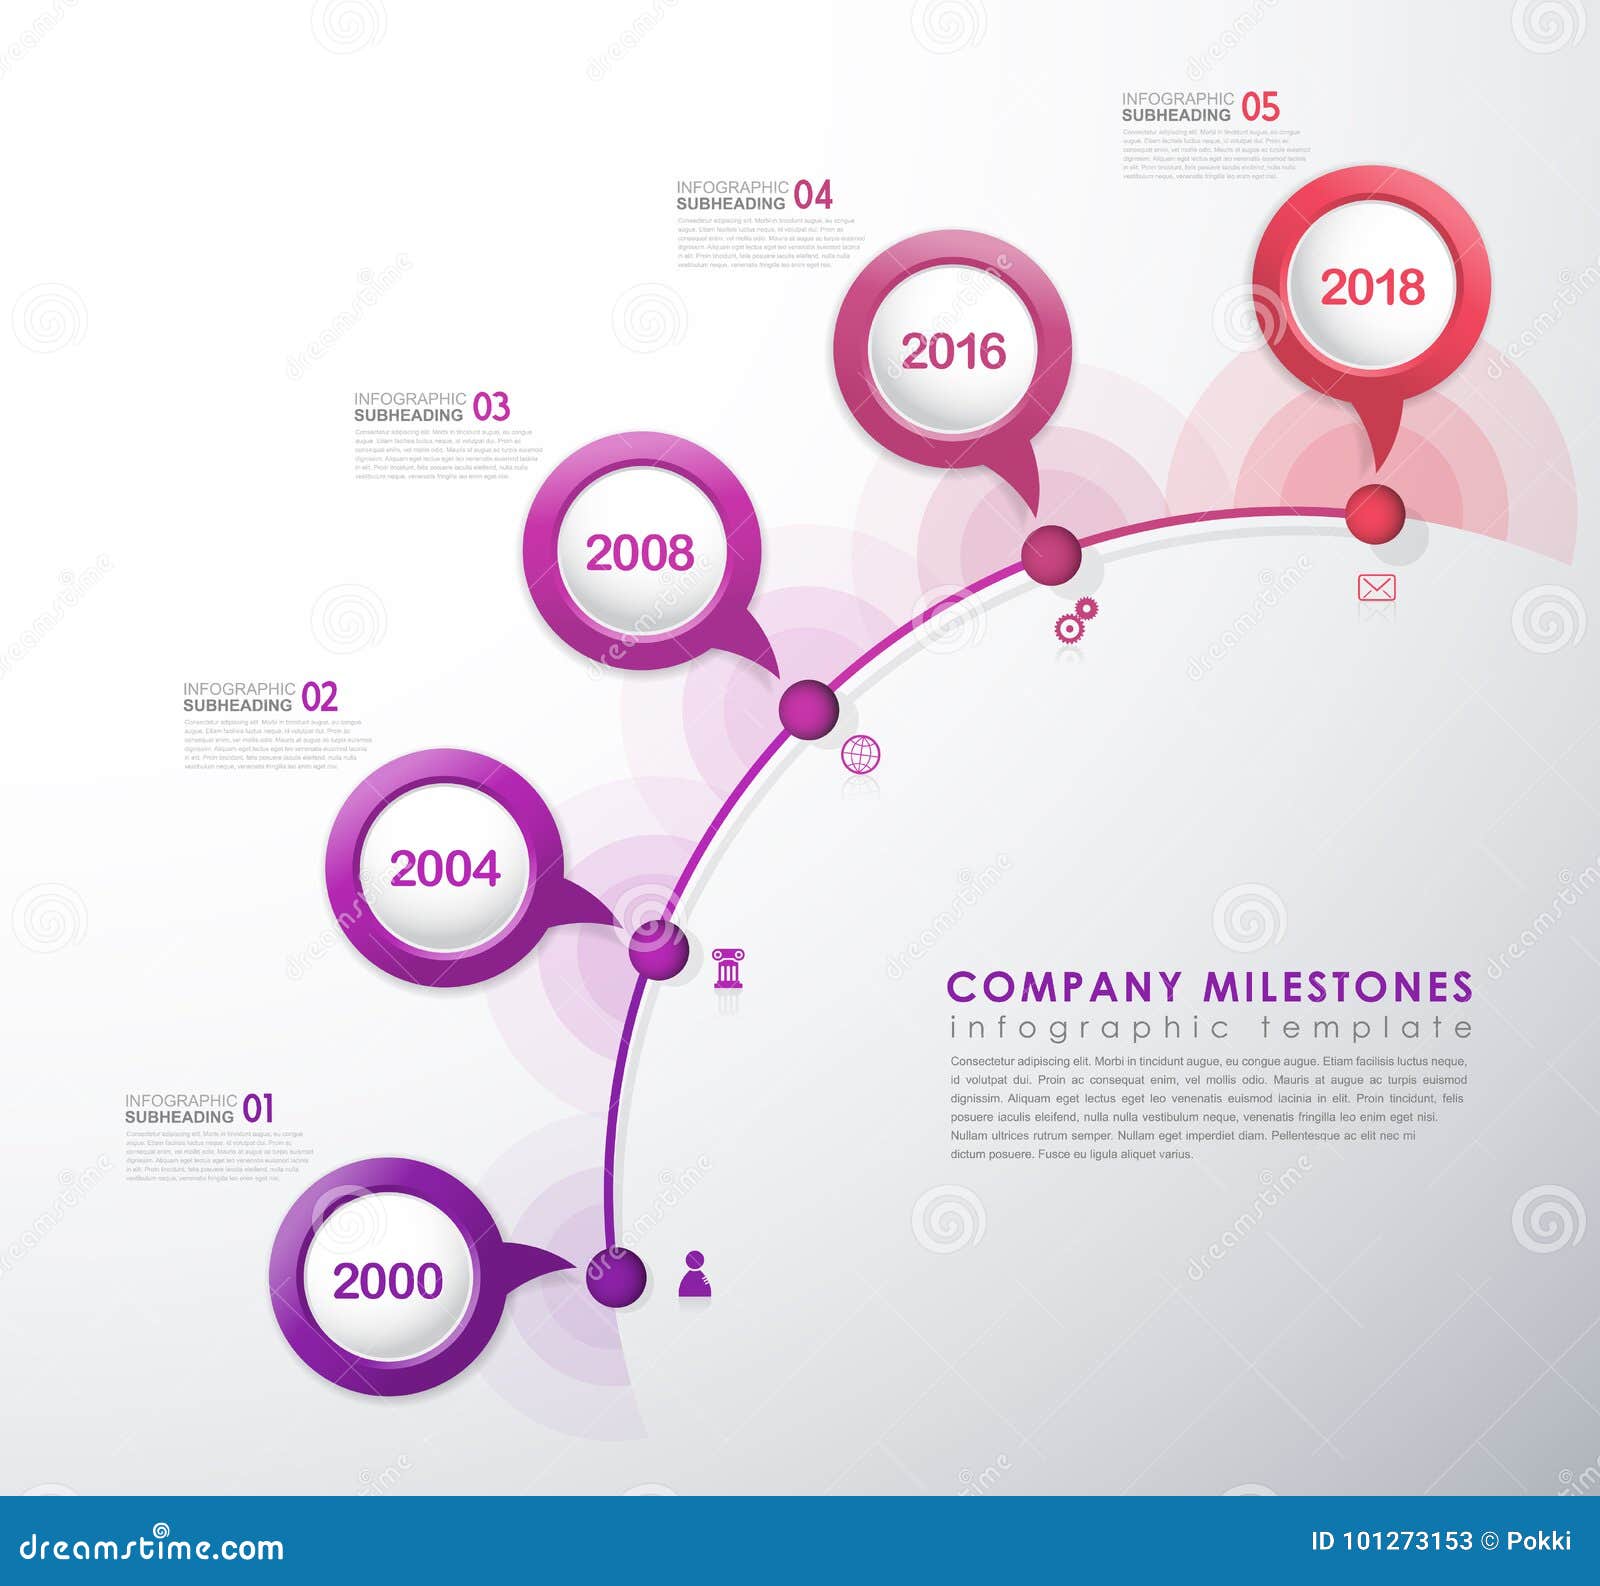 infographic startup milestones timeline  template.